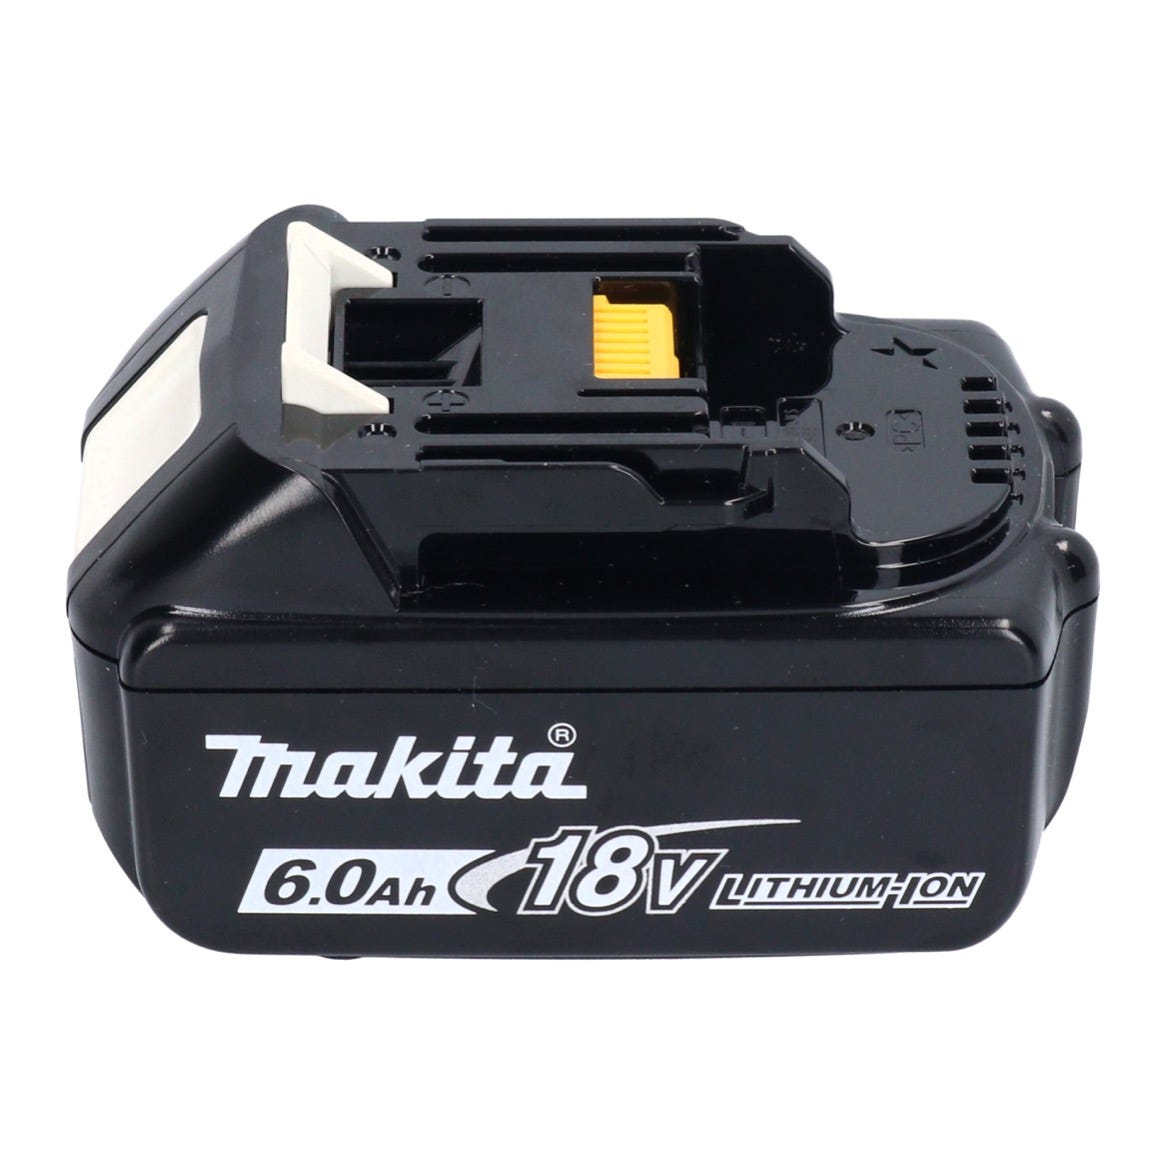 Makita DJV185G1 Scie sauteuse sans fil 18V Brushless + 1x Batterie 6,0 Ah - sans chargeur 2